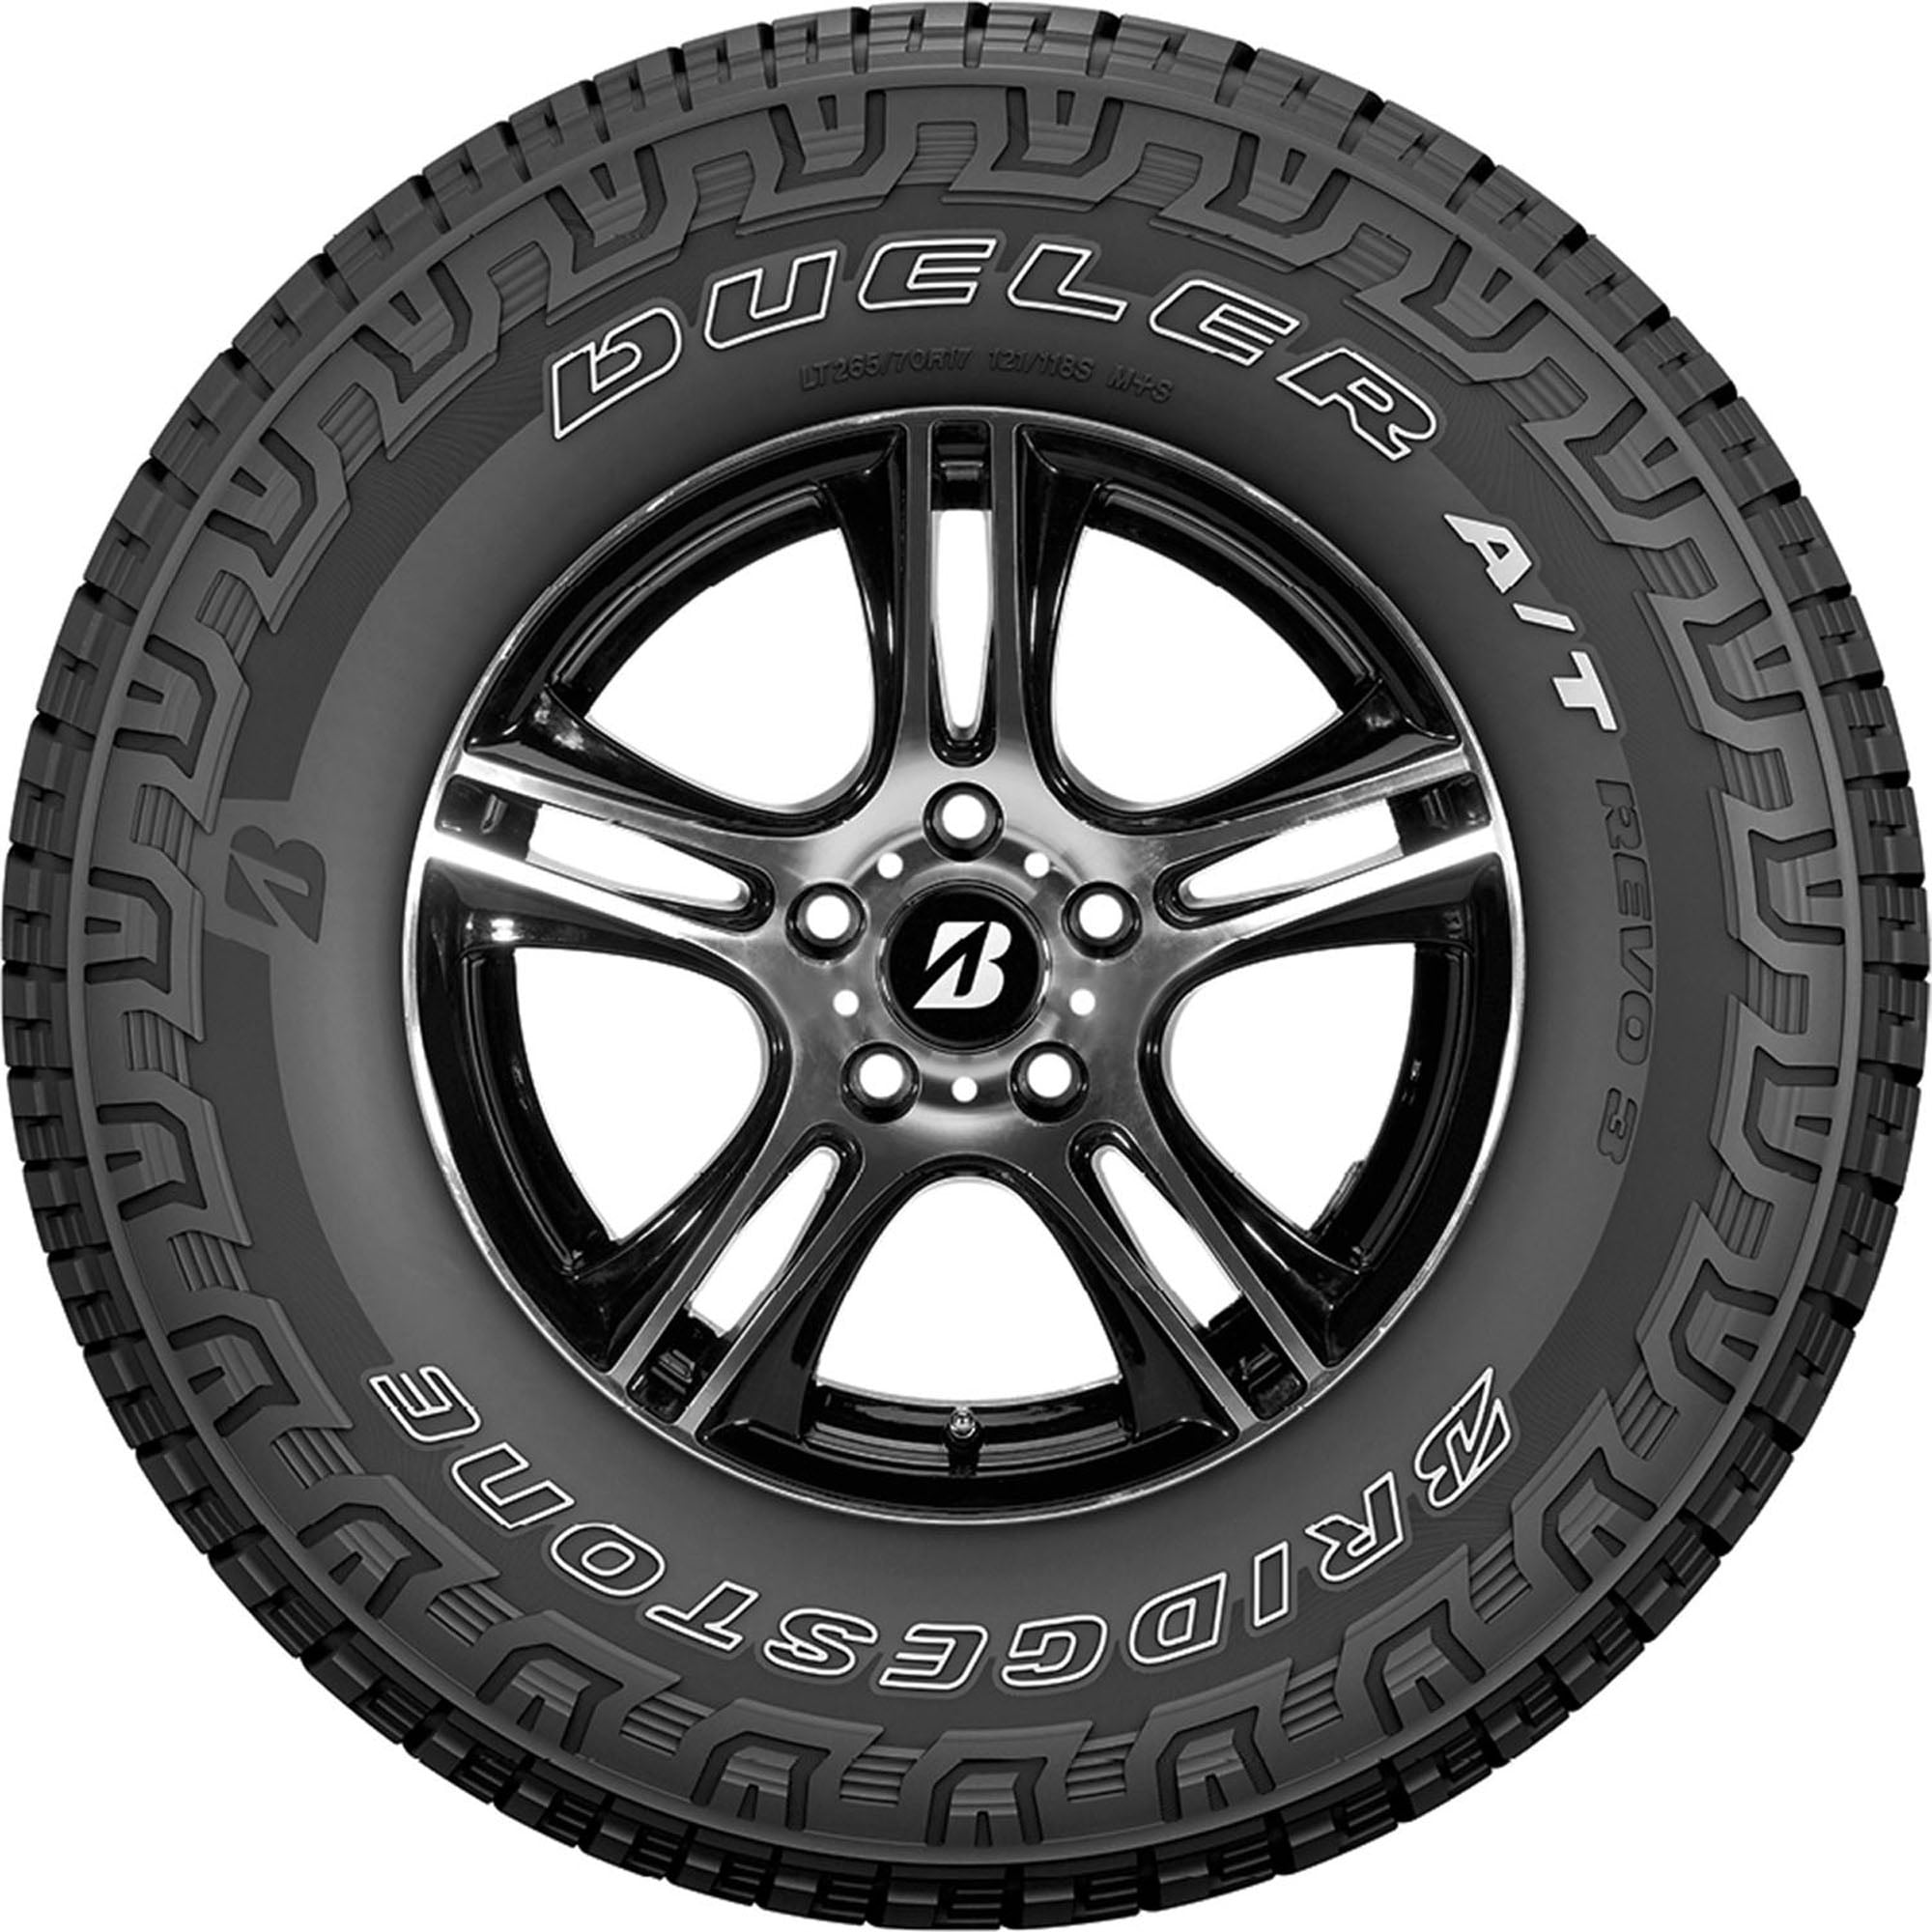 Bridgestone Dueler A/T Revo 3 All Terrain LT245/75R17 121/118R E Light  Truck Tire Fits: 2011-23 Chevrolet Silverado 2500 HD WT, 2012-13 Ford F-150  XLT